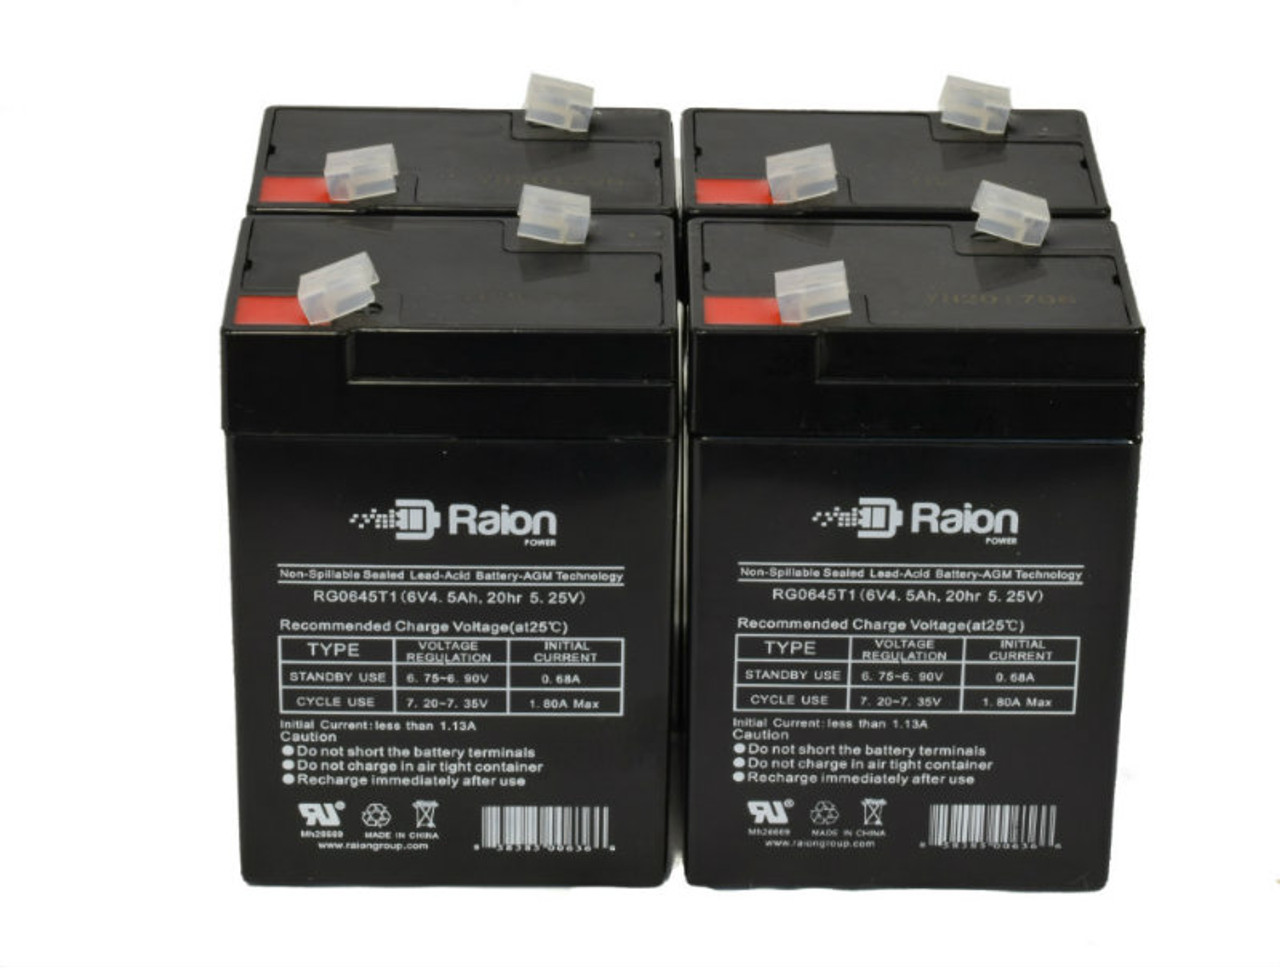 Raion Power 6V 4.5Ah Replacement Emergency Light Battery for Light Alarms 5E15BL - 4 Pack